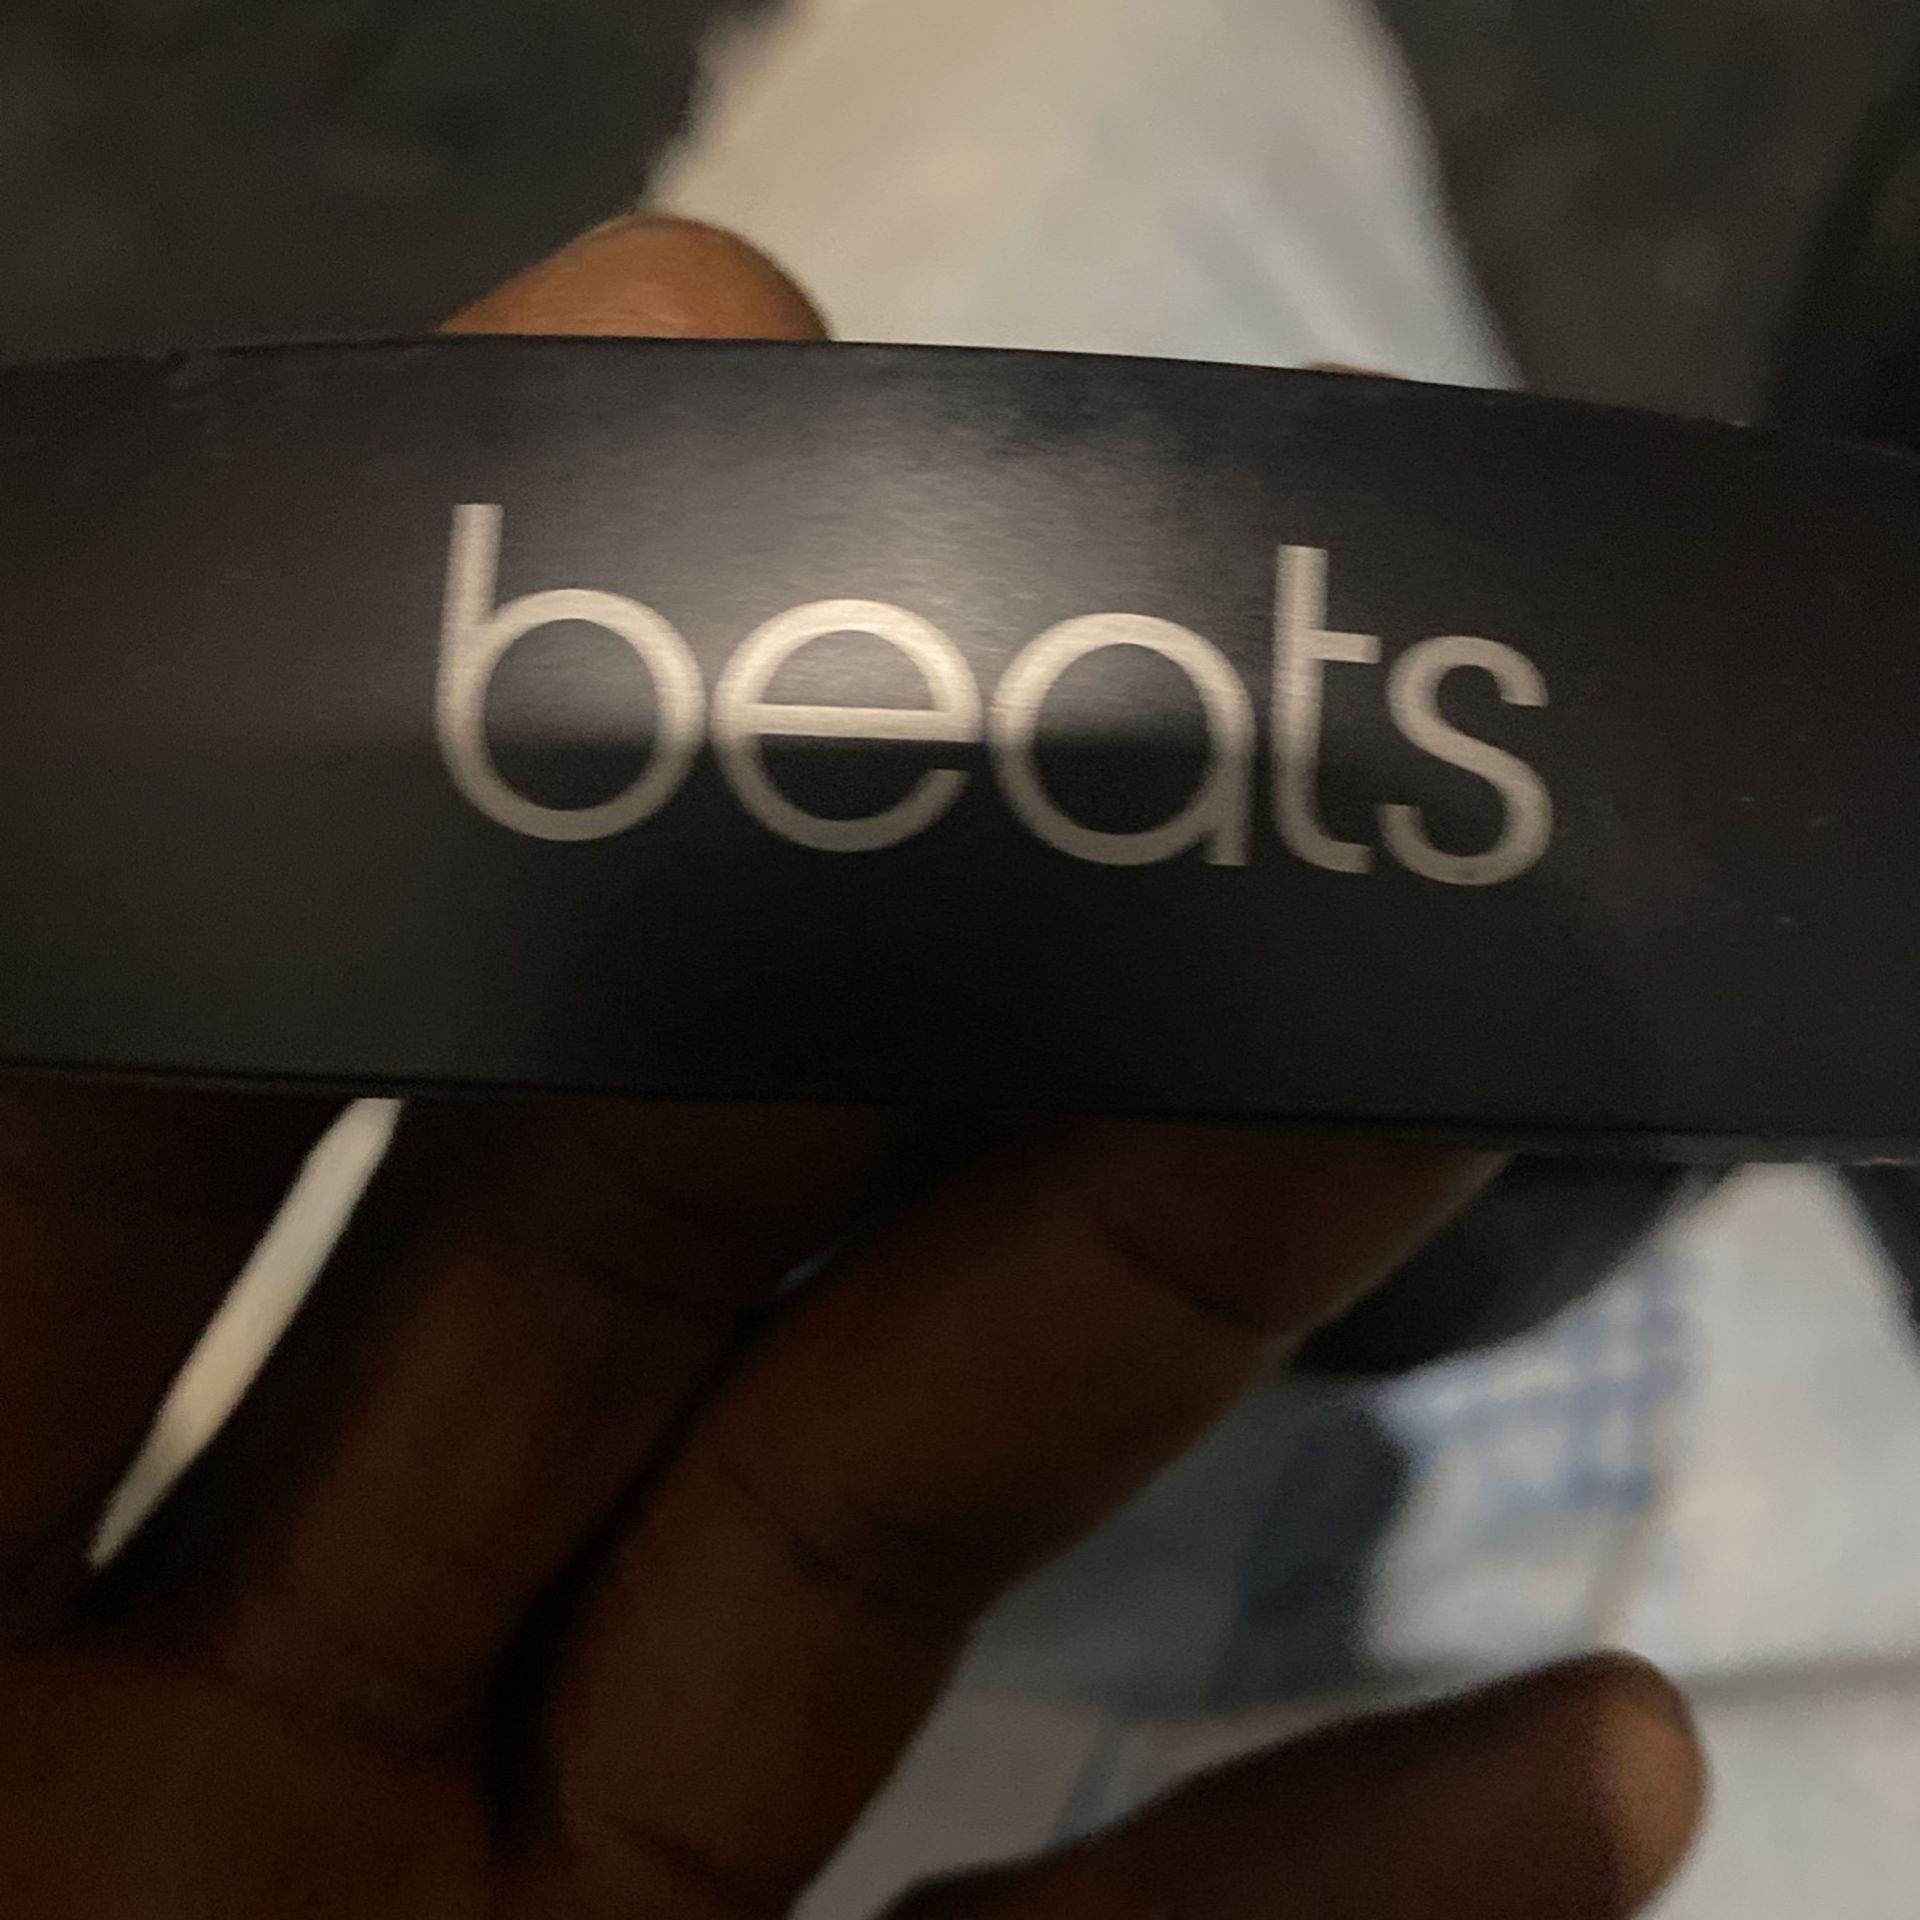 Beat Solo 3 $120